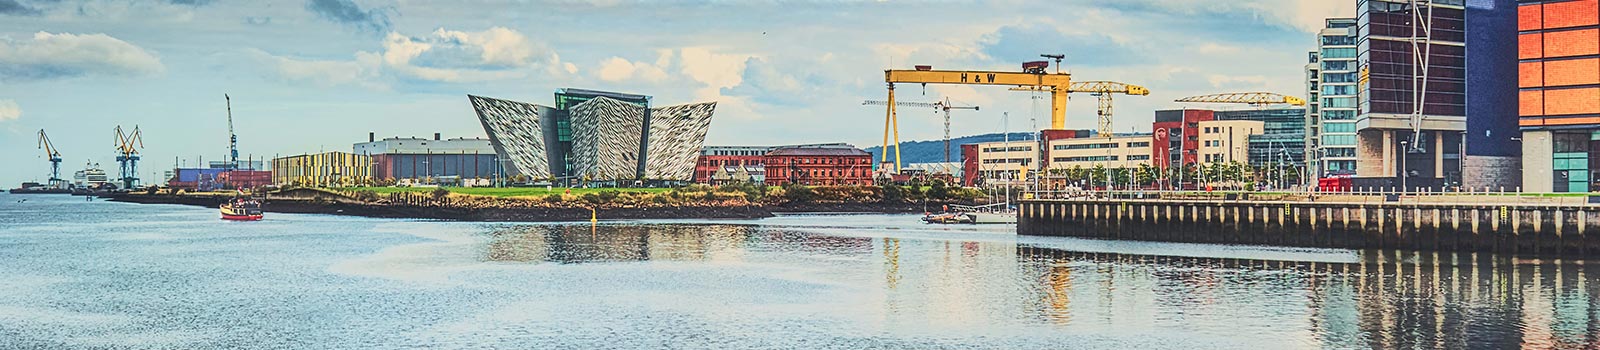 Belfast - Titanic Building and H&W cranes